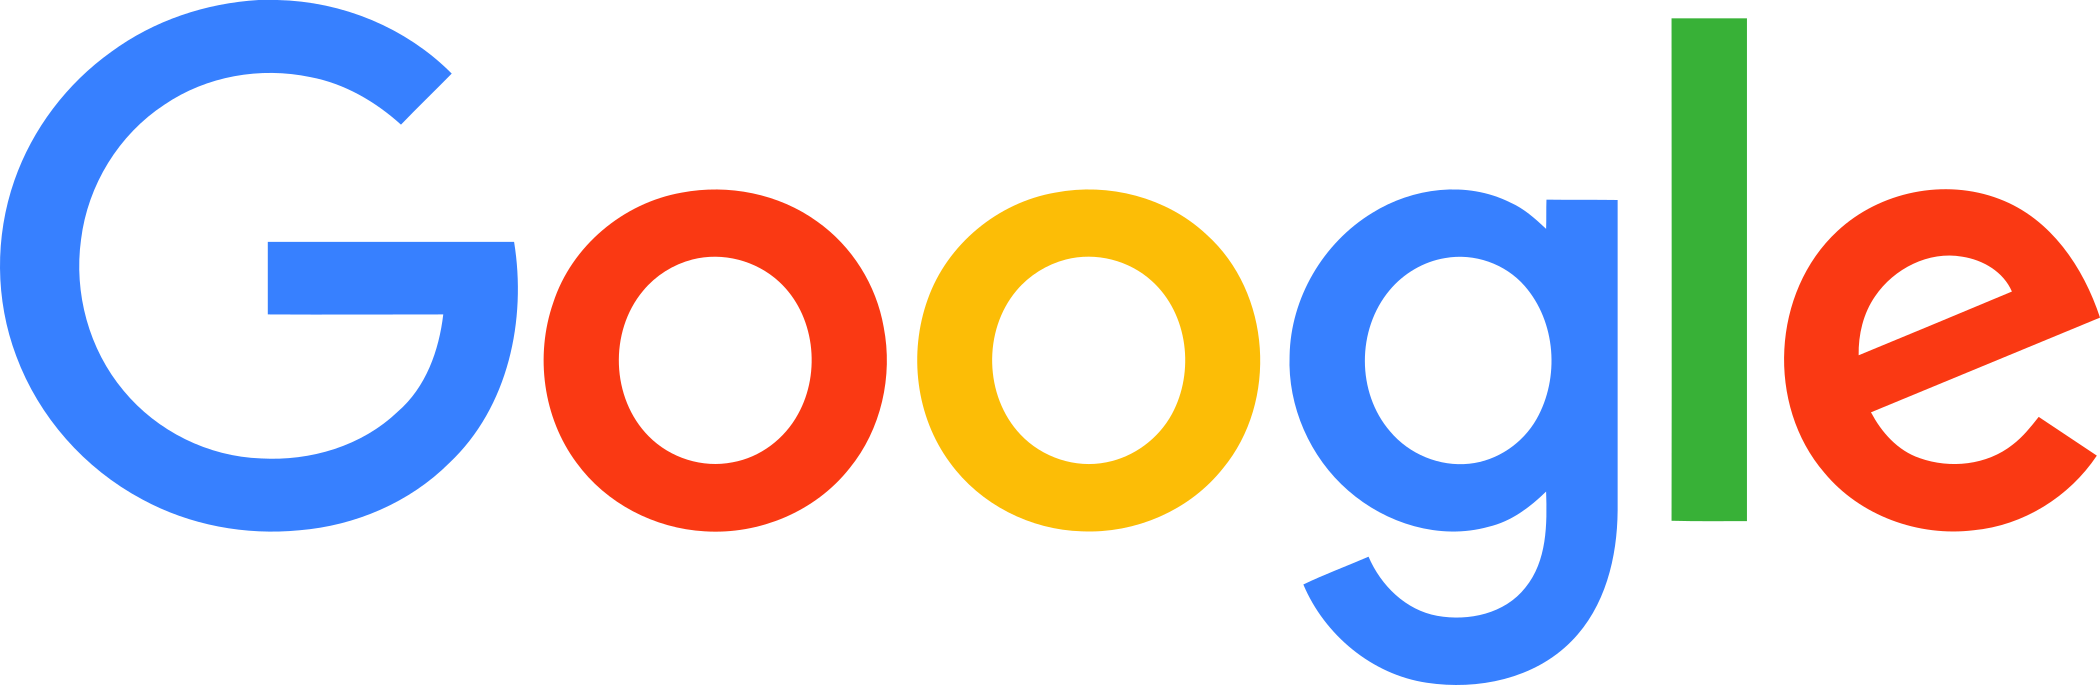 google-logo-1-1